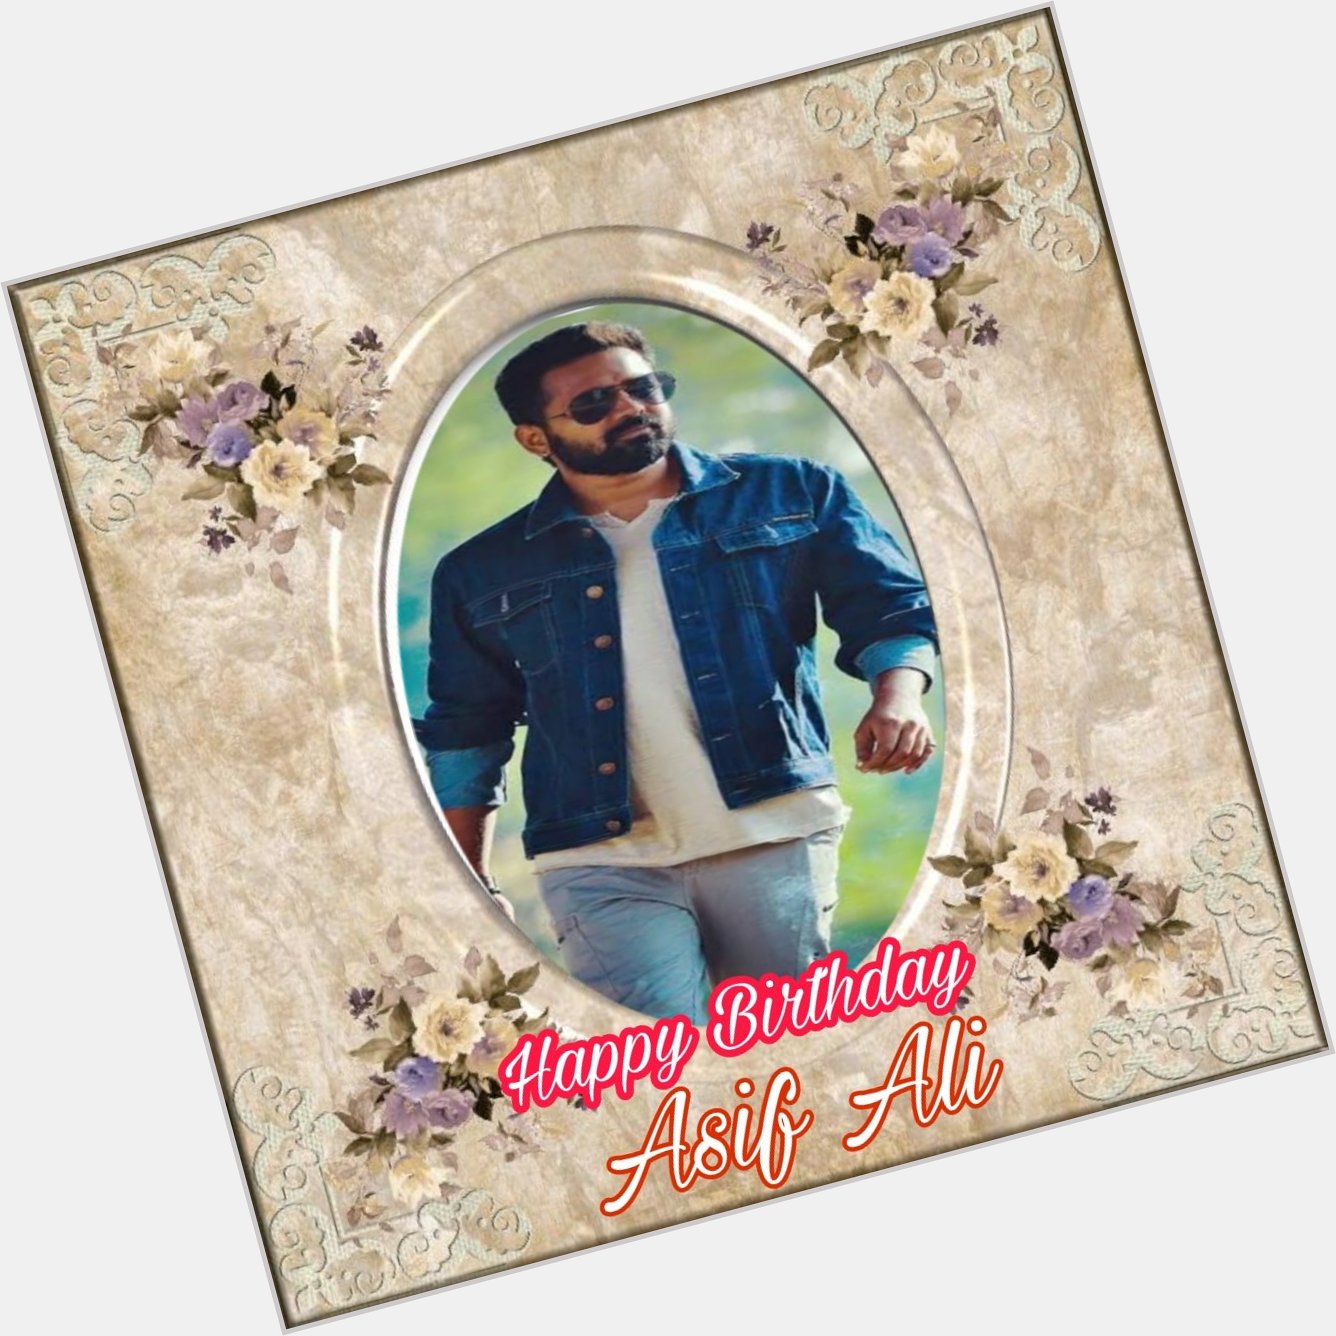 Happy Birthday Asif Ali   